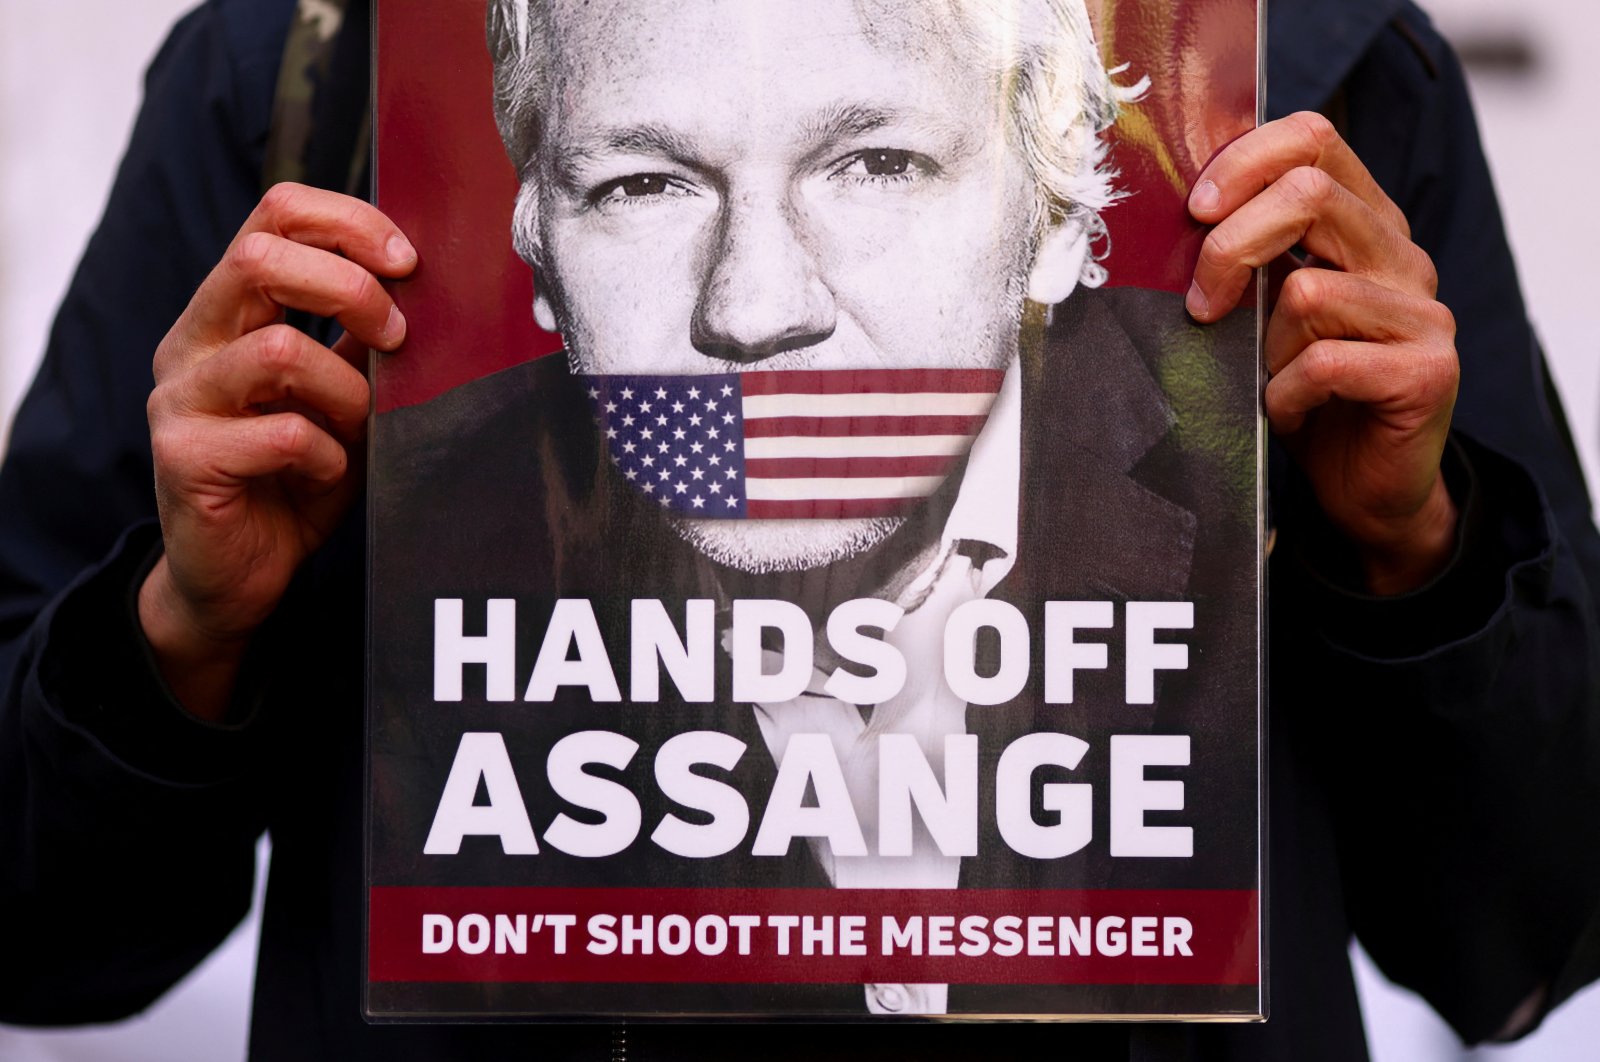 Inggris menyetujui ekstradisi pendiri WikiLeaks Assange ke AS